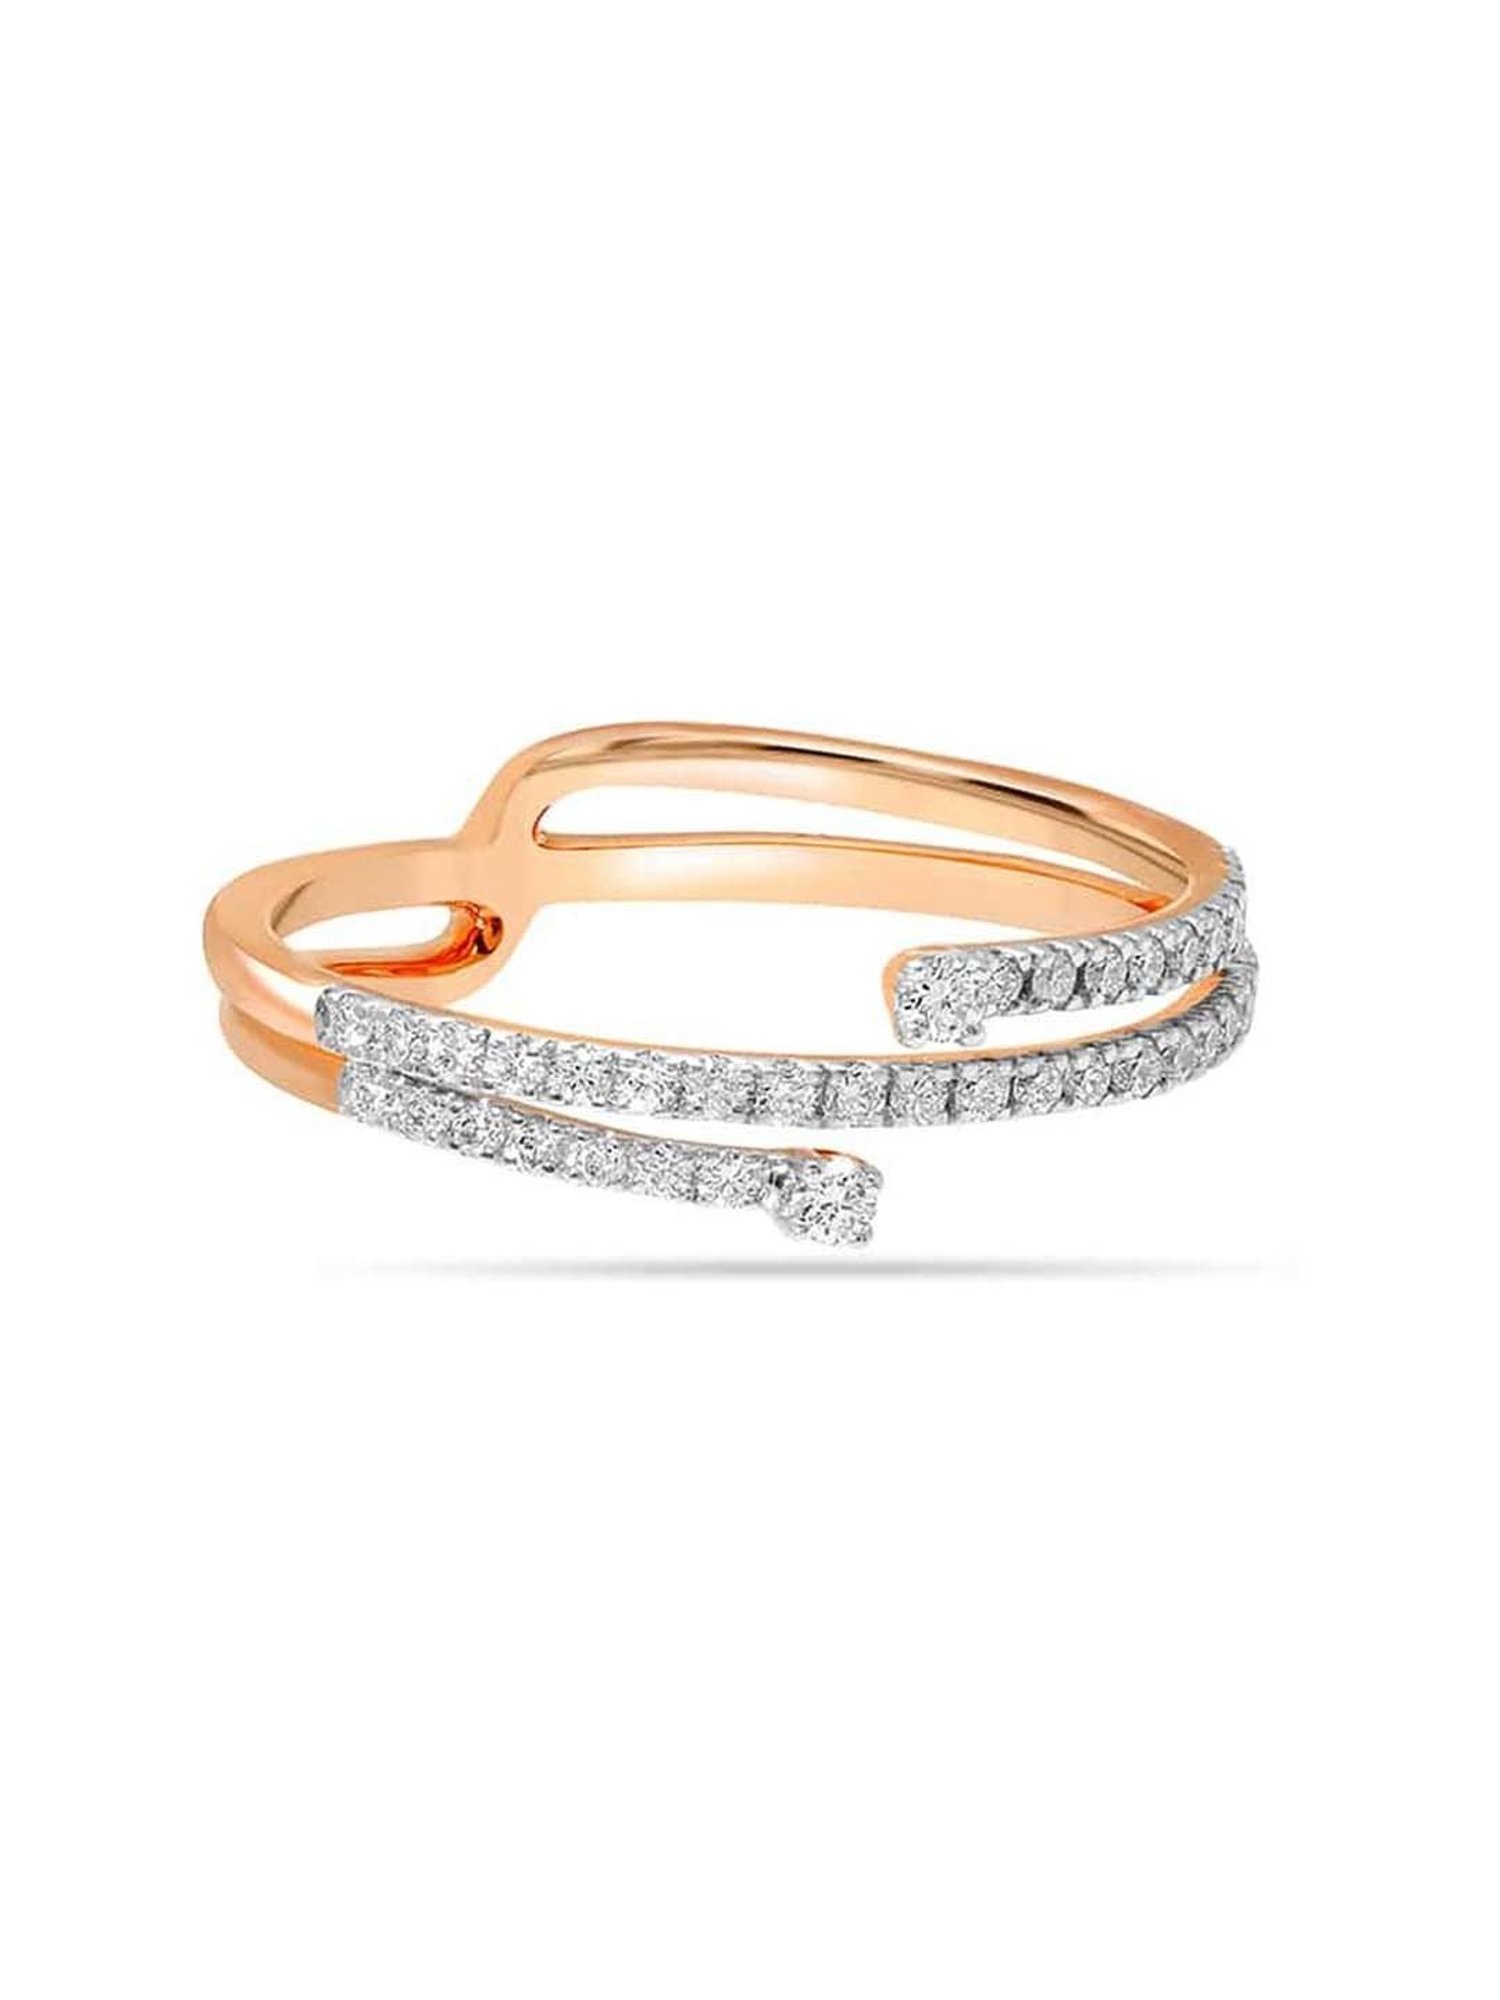 Buy 18 KT Rose Gold Stylish Ring at Best Price | Tanishq UAE